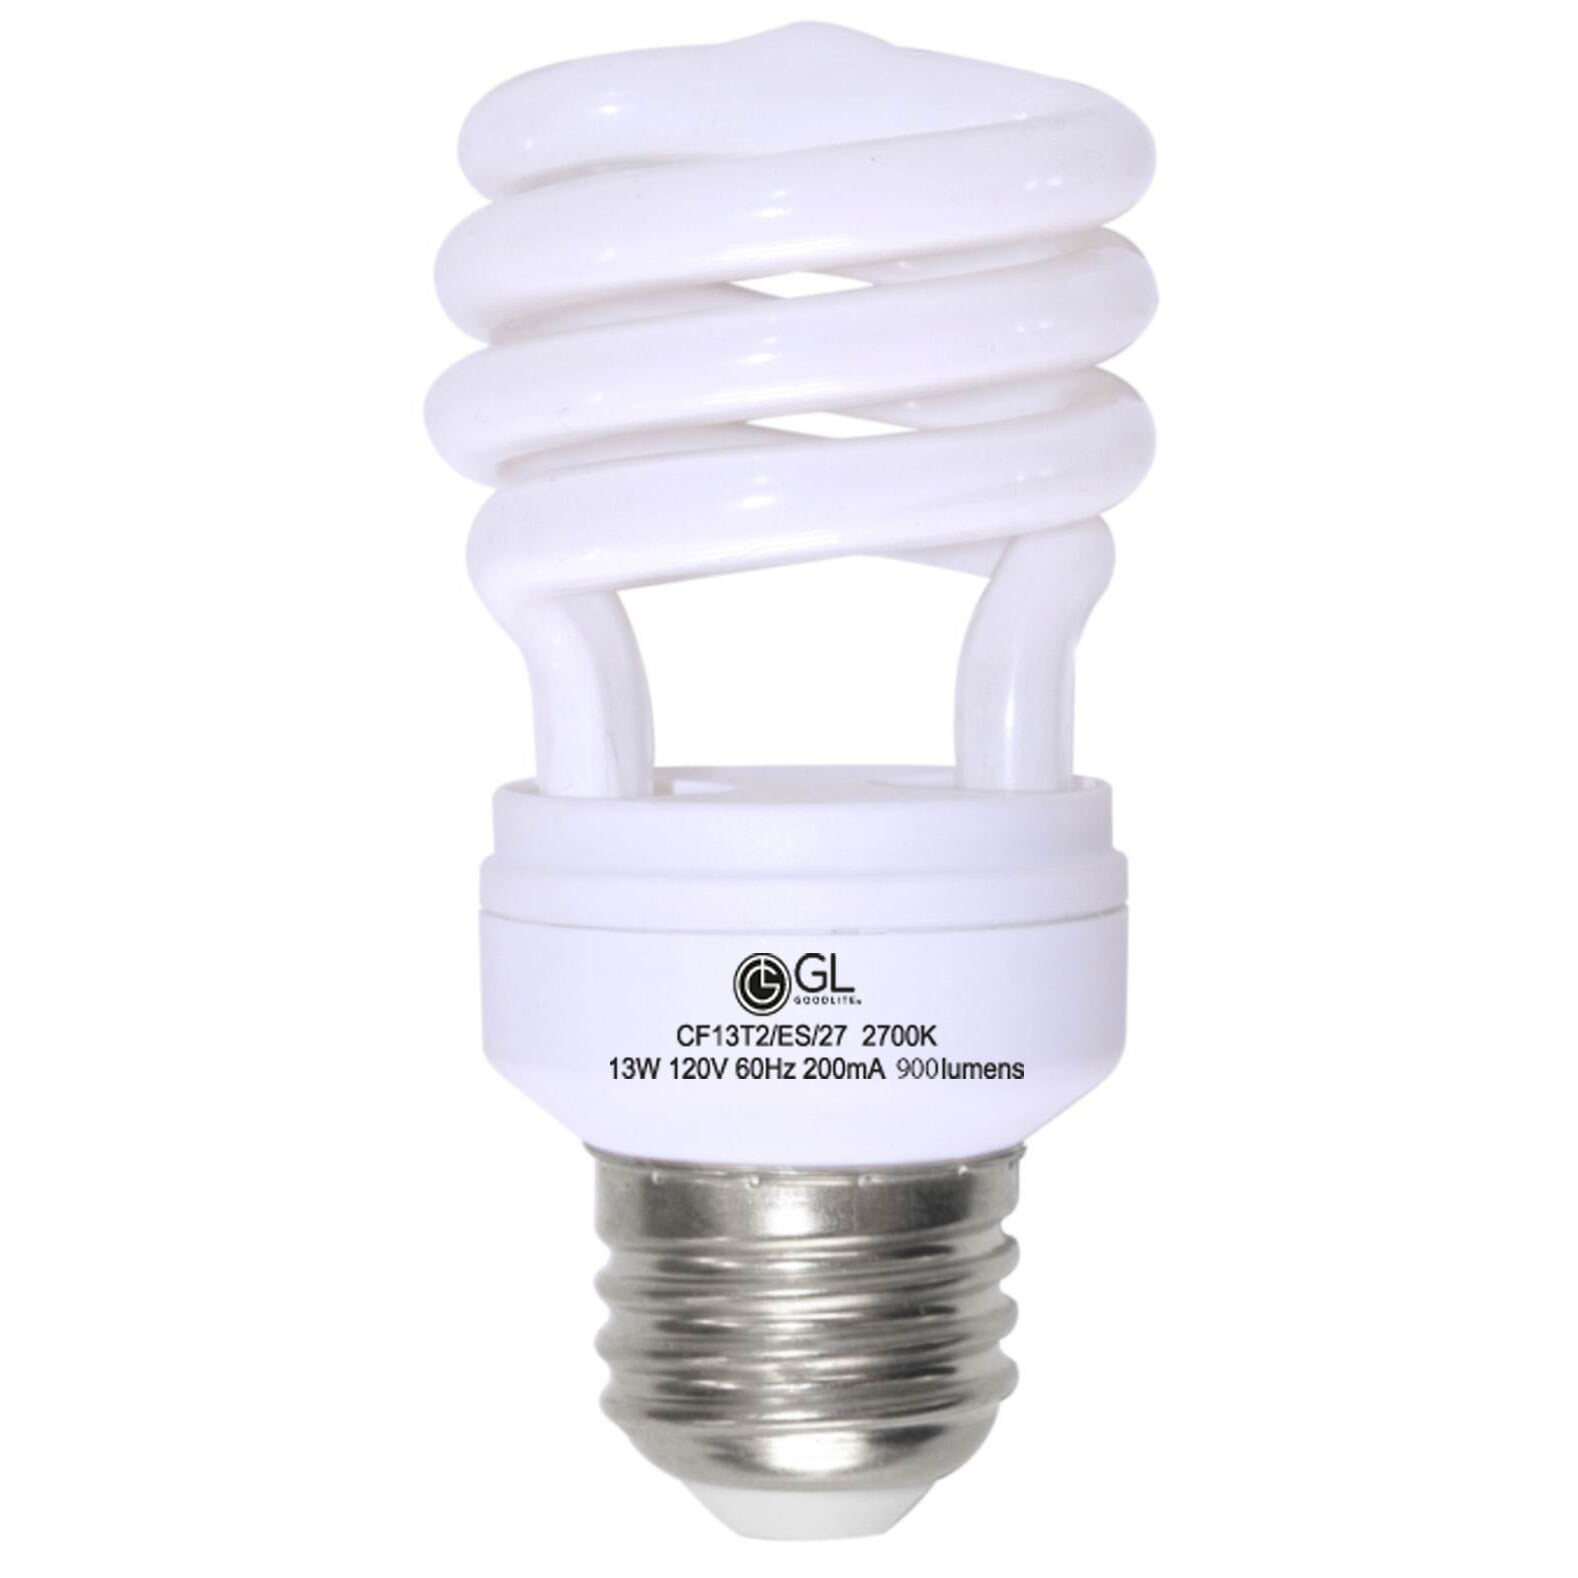 6 MAXLITE T2 Spiral Max 13W Fluorescent Light Bulbs CFL ENERGY STAR Brand New 